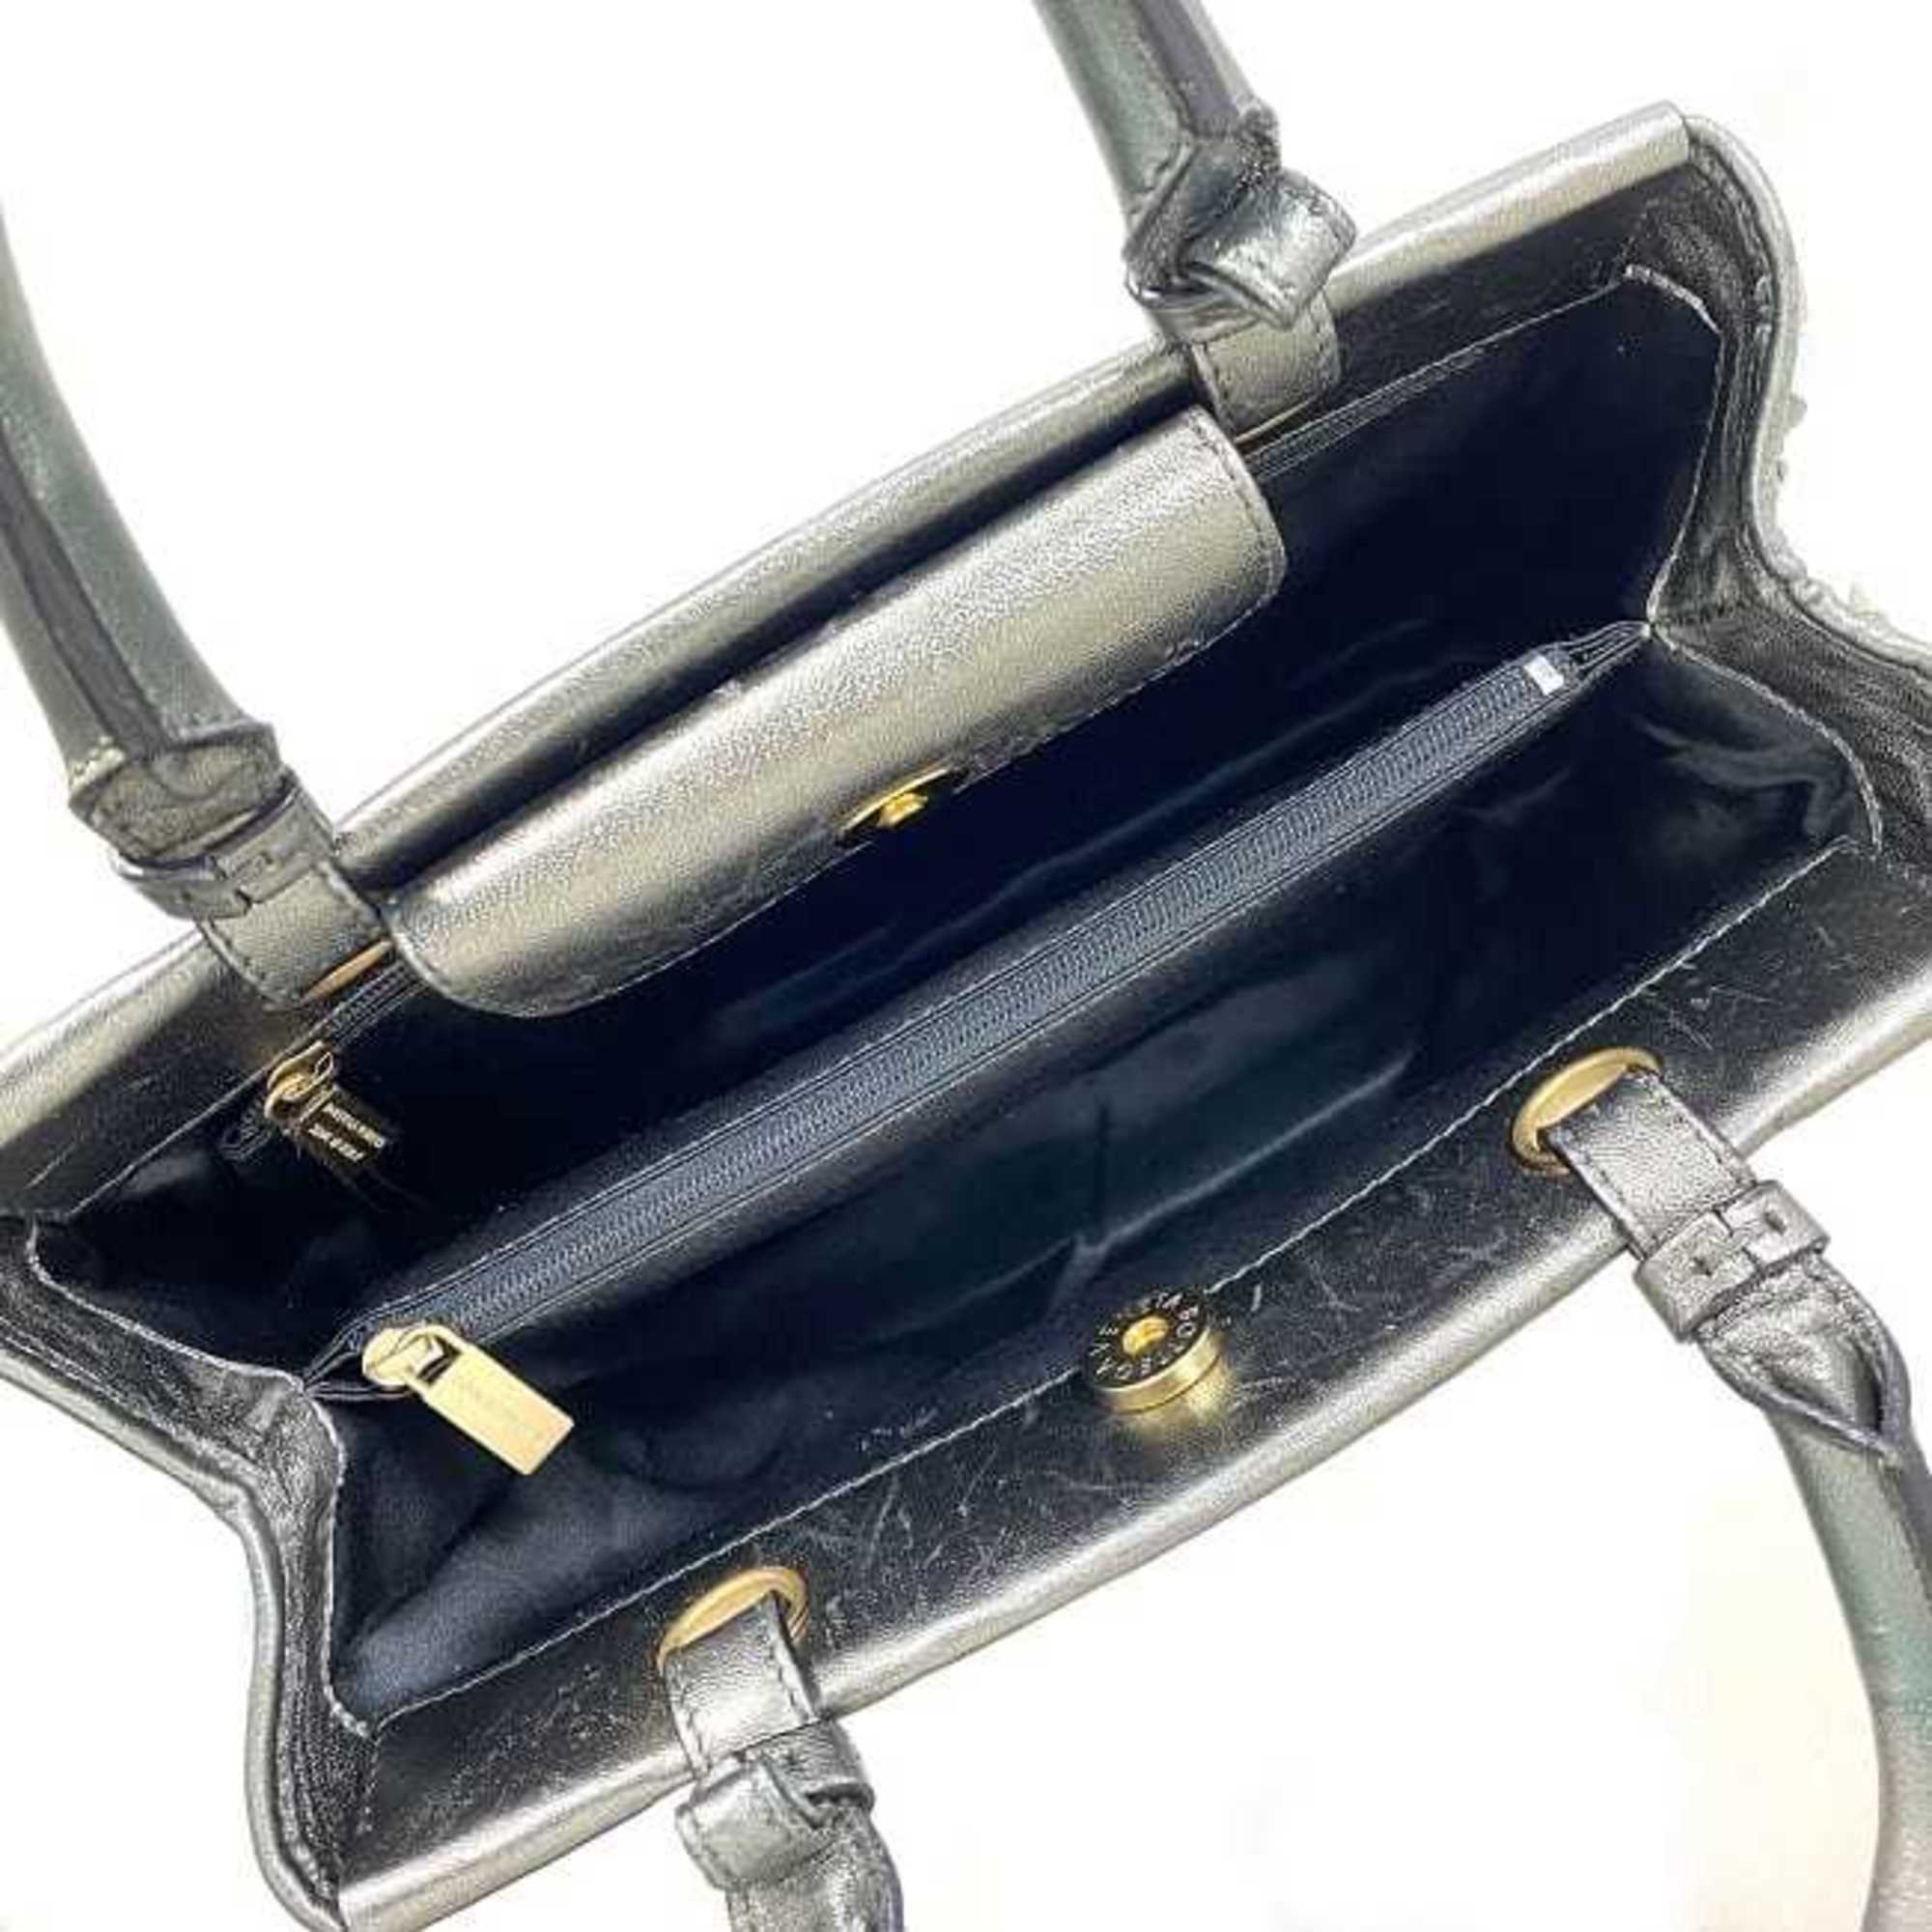 Bottega Veneta 2way bag silver green light blue 107716 handbag leather BOTTEGA VENETA shoulder scale women's compartment